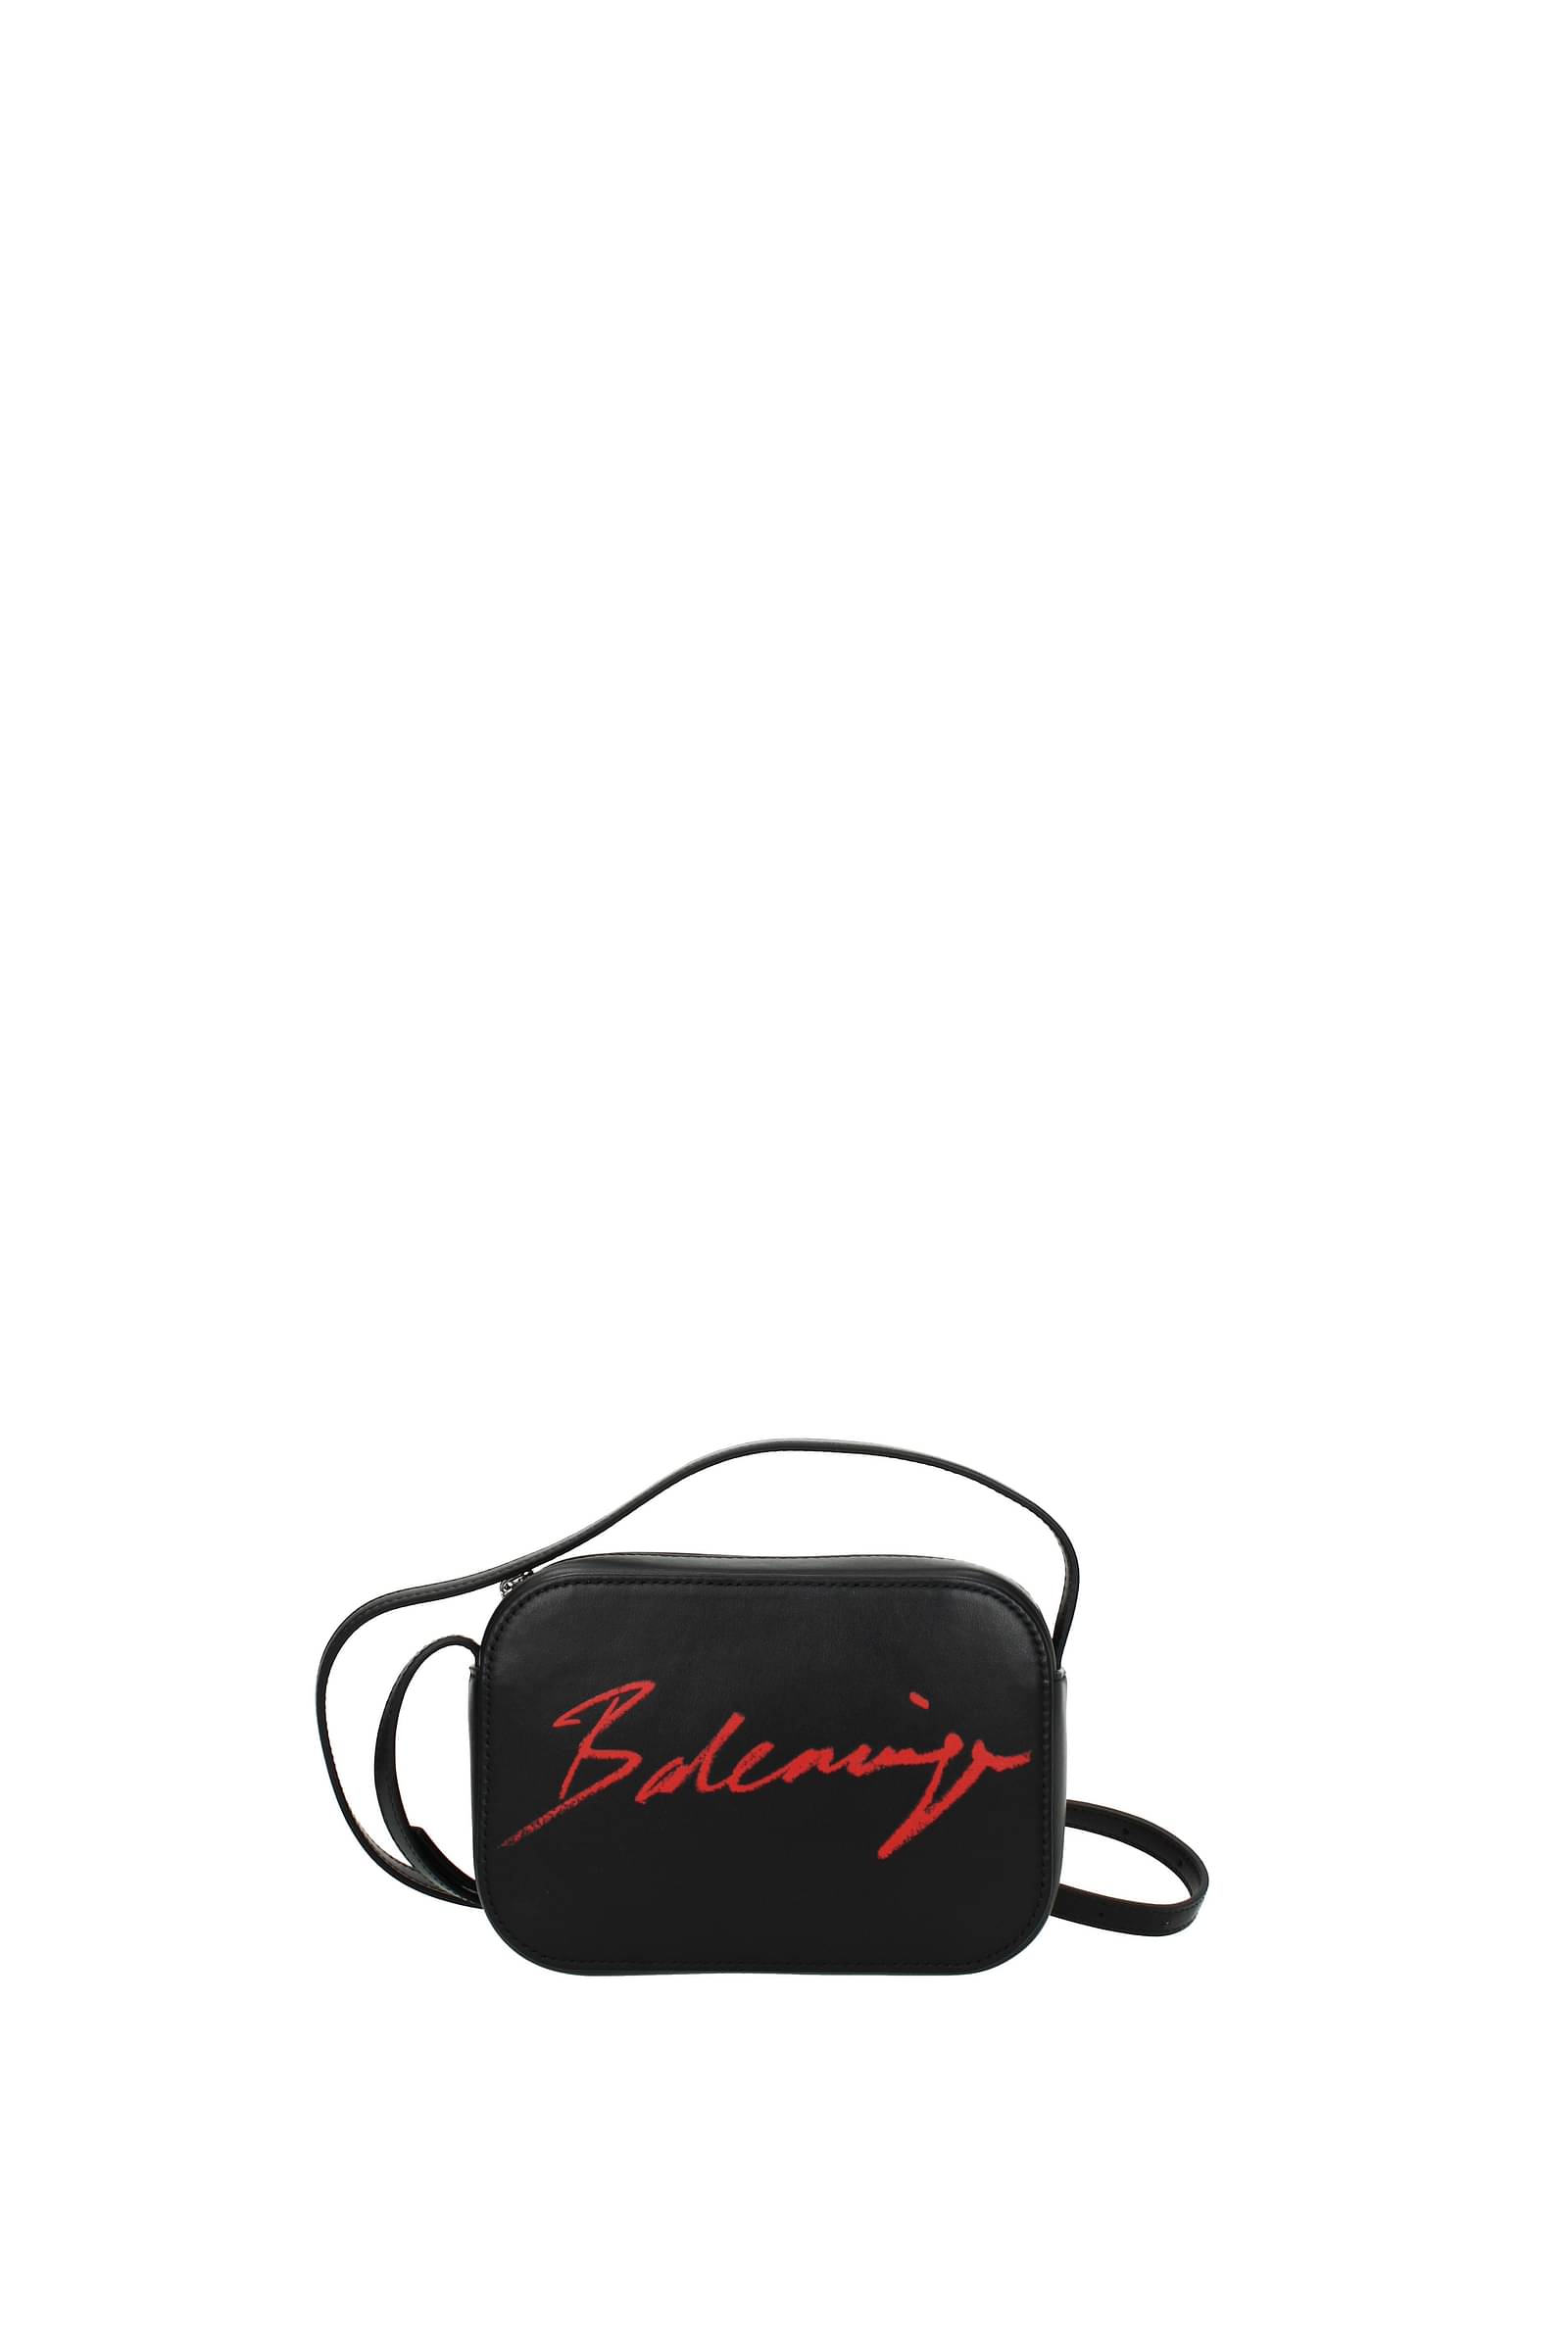 Balenciaga Explorer Black Bag  Fashion Clinic Online Store